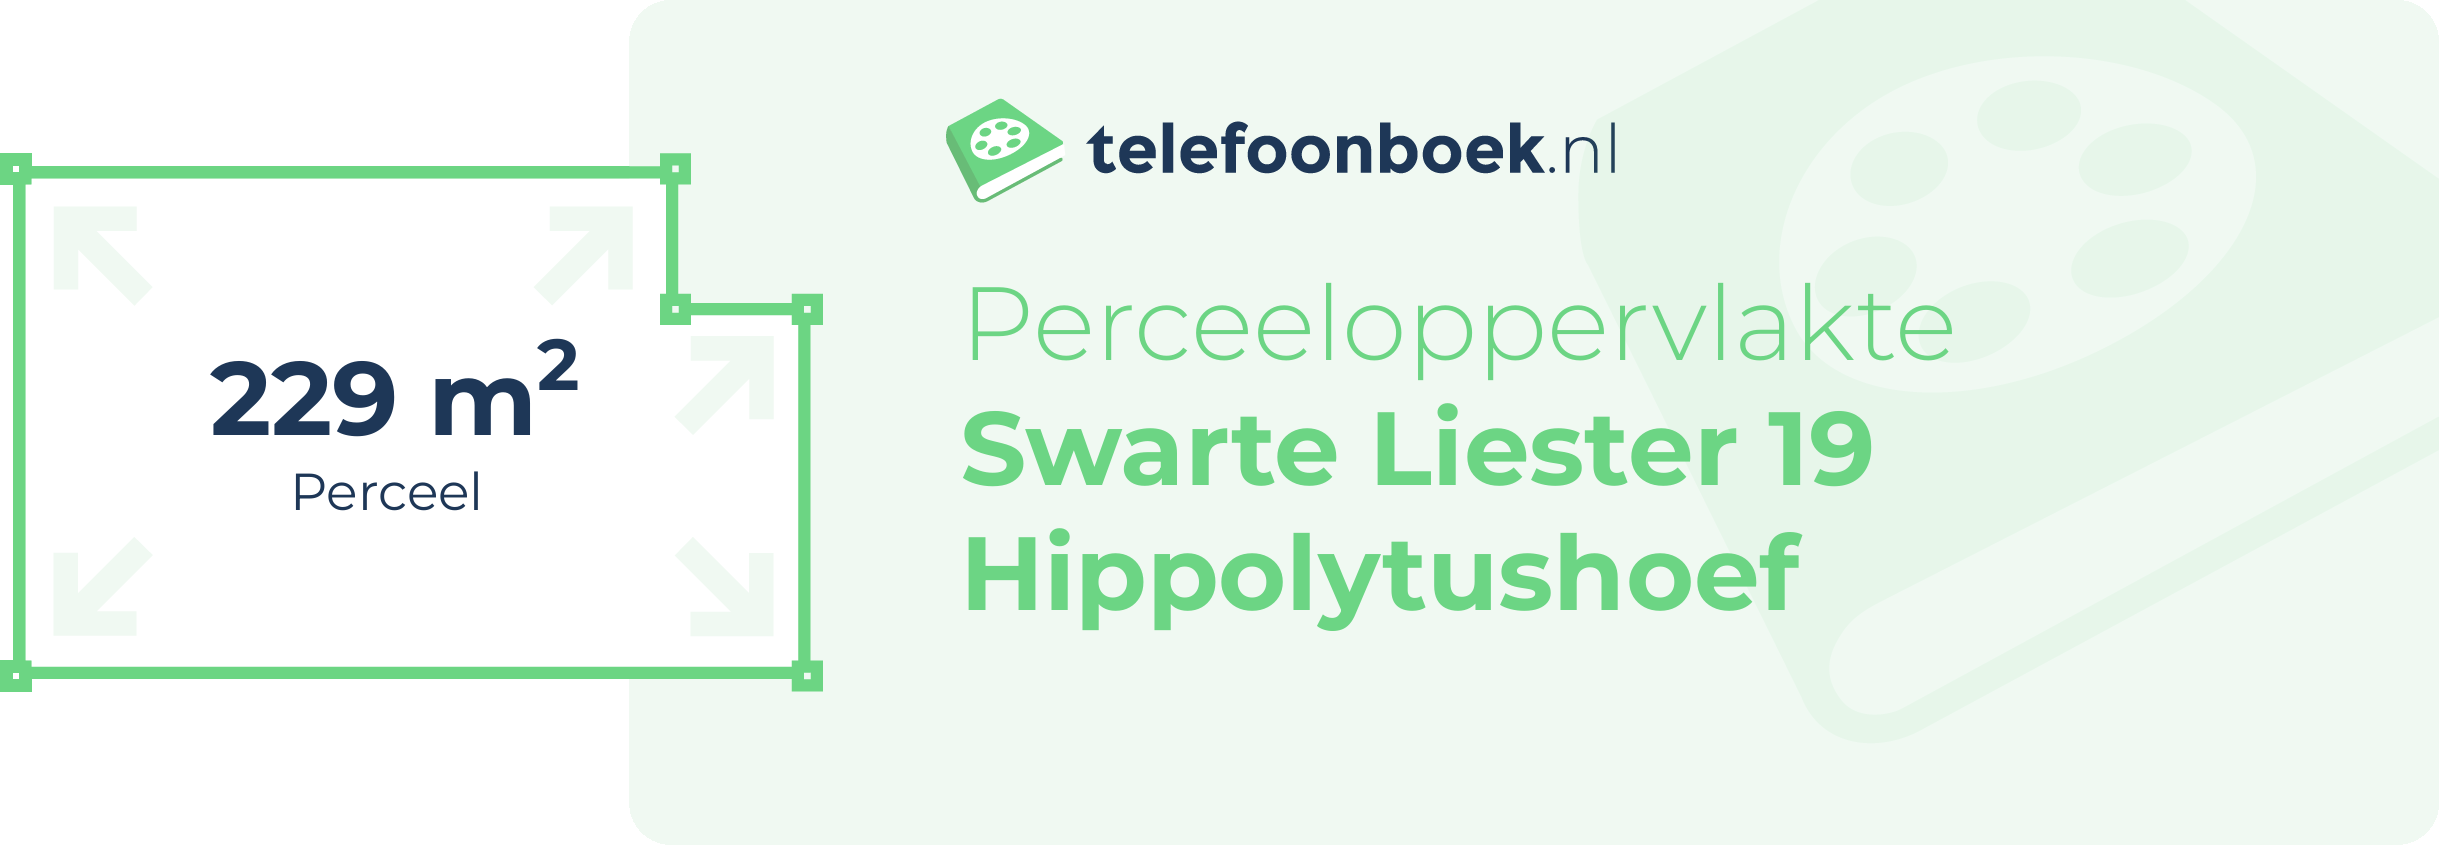 Perceeloppervlakte Swarte Liester 19 Hippolytushoef